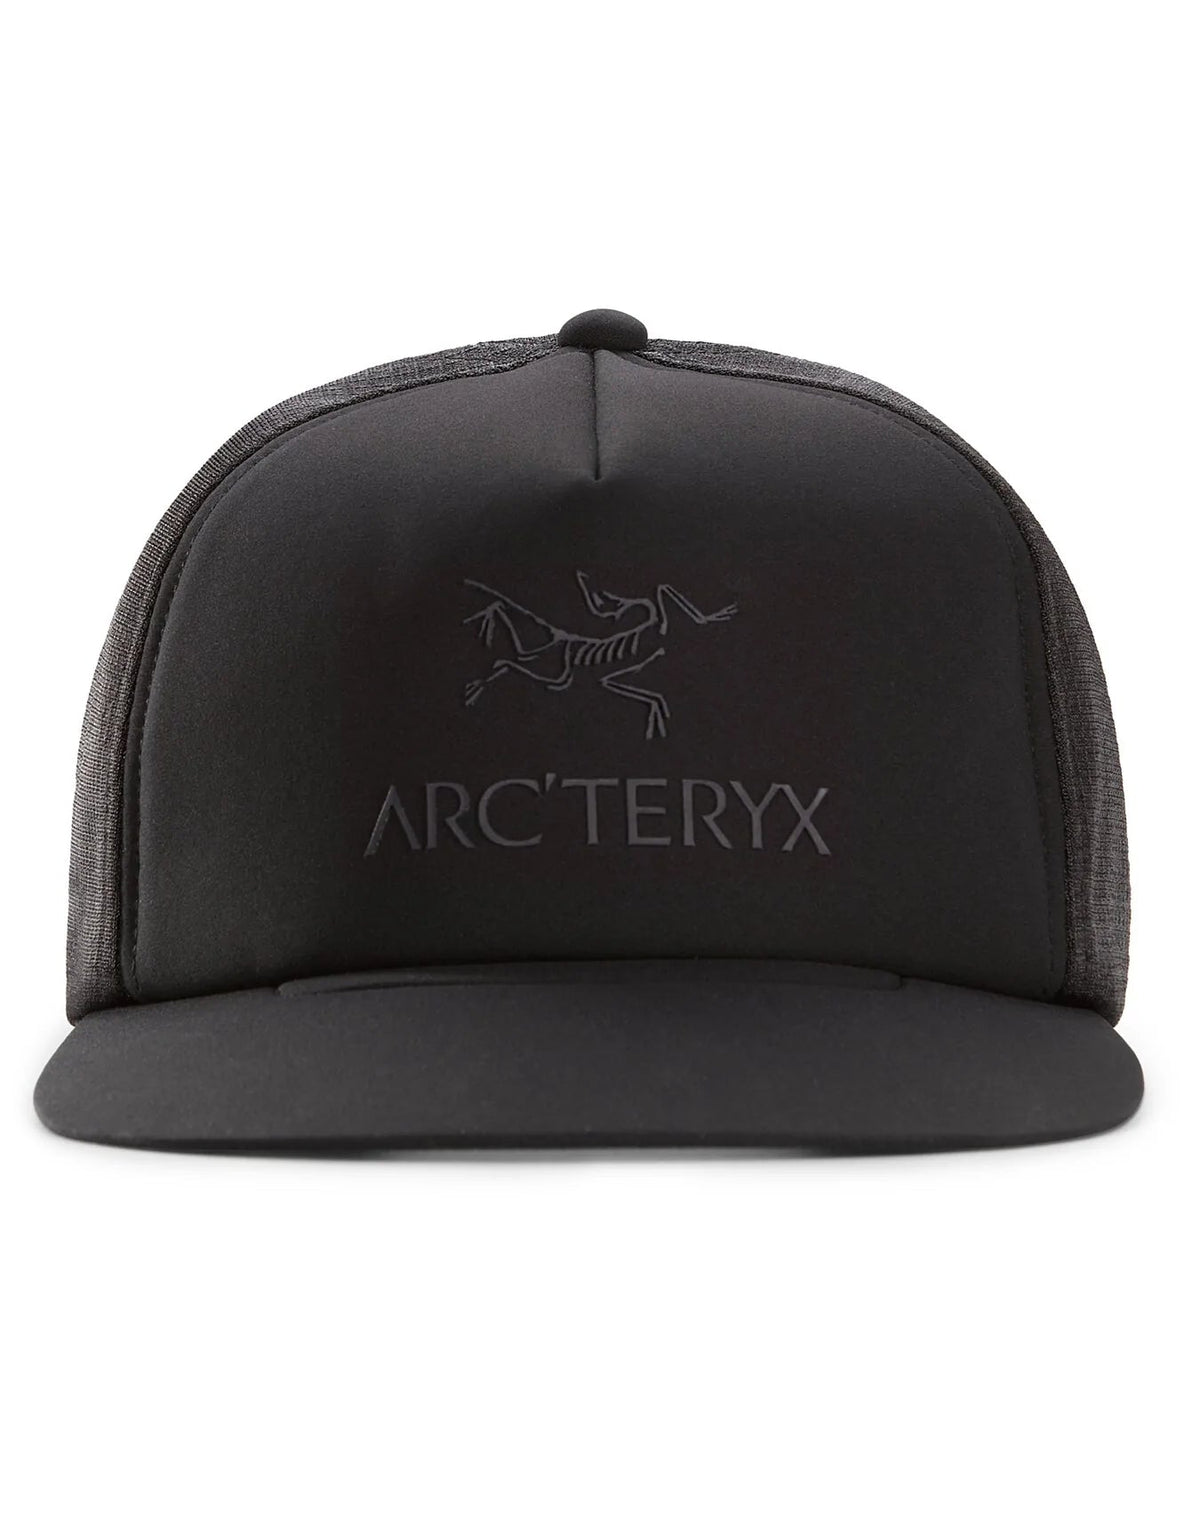 Arcteryx Logo Trucker Hat (Unisex) - Find Your Feet Australia Hobart Launceston Tasmania - Black